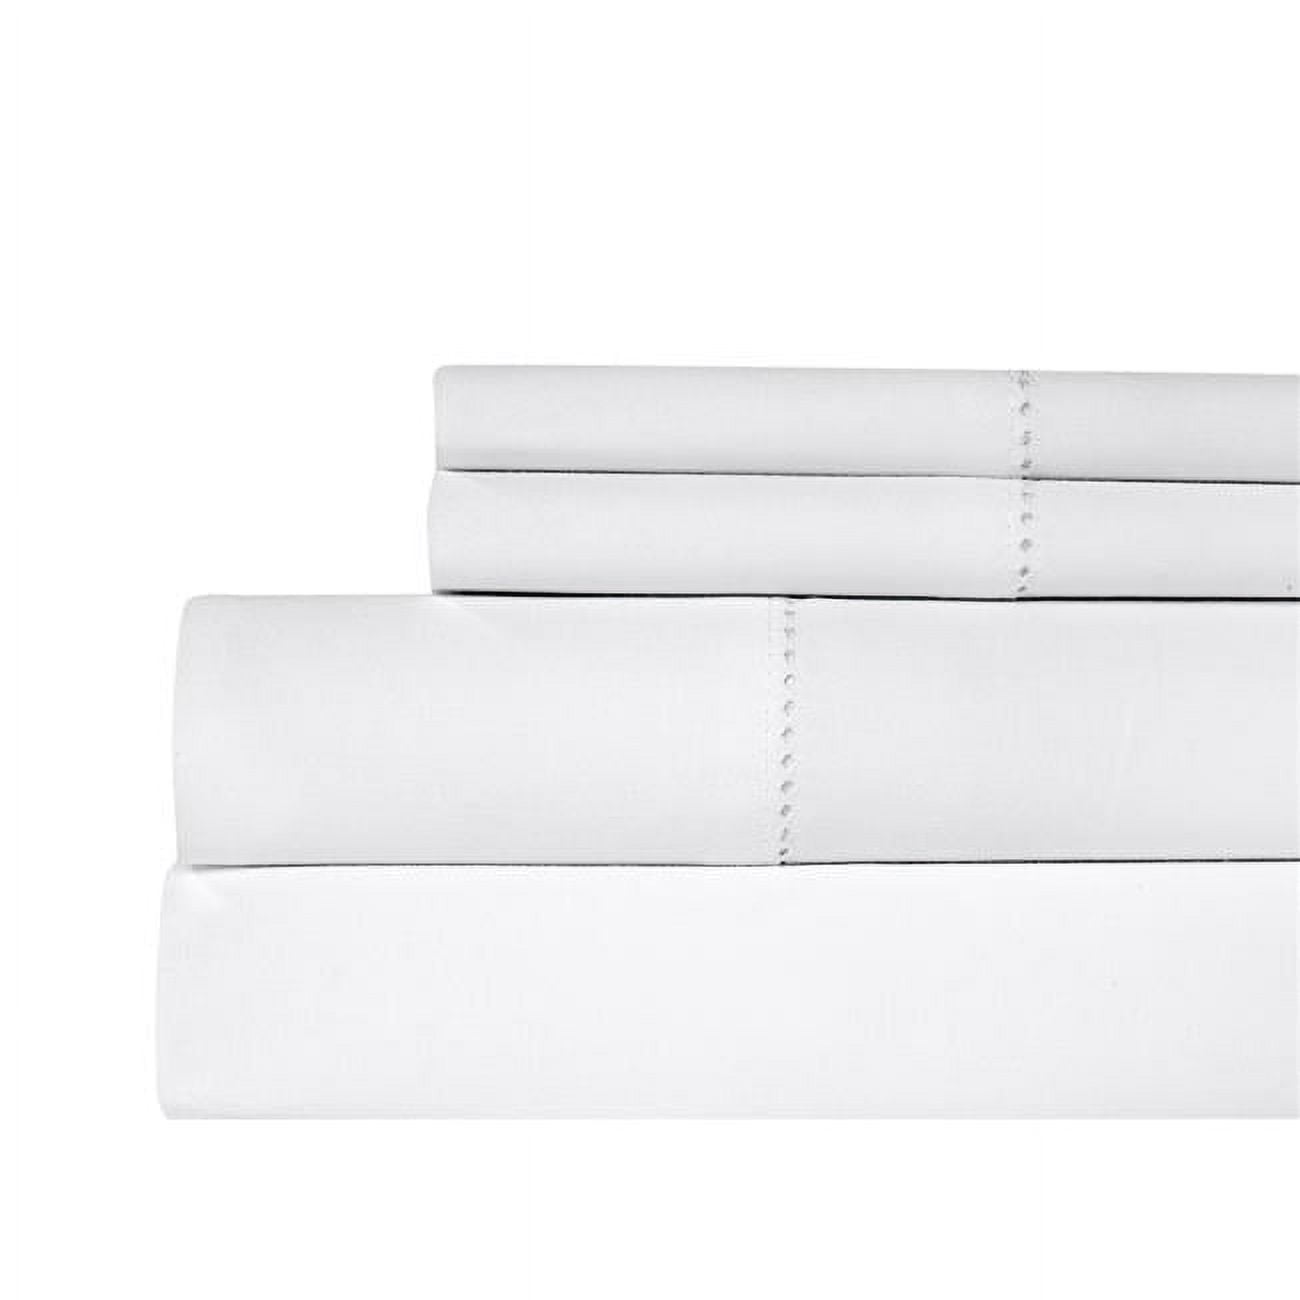 Hem-500ctn-wht-qn Hemstitch 500 Thread Count 100 Percent Cotton Sheet Set - Queen - White